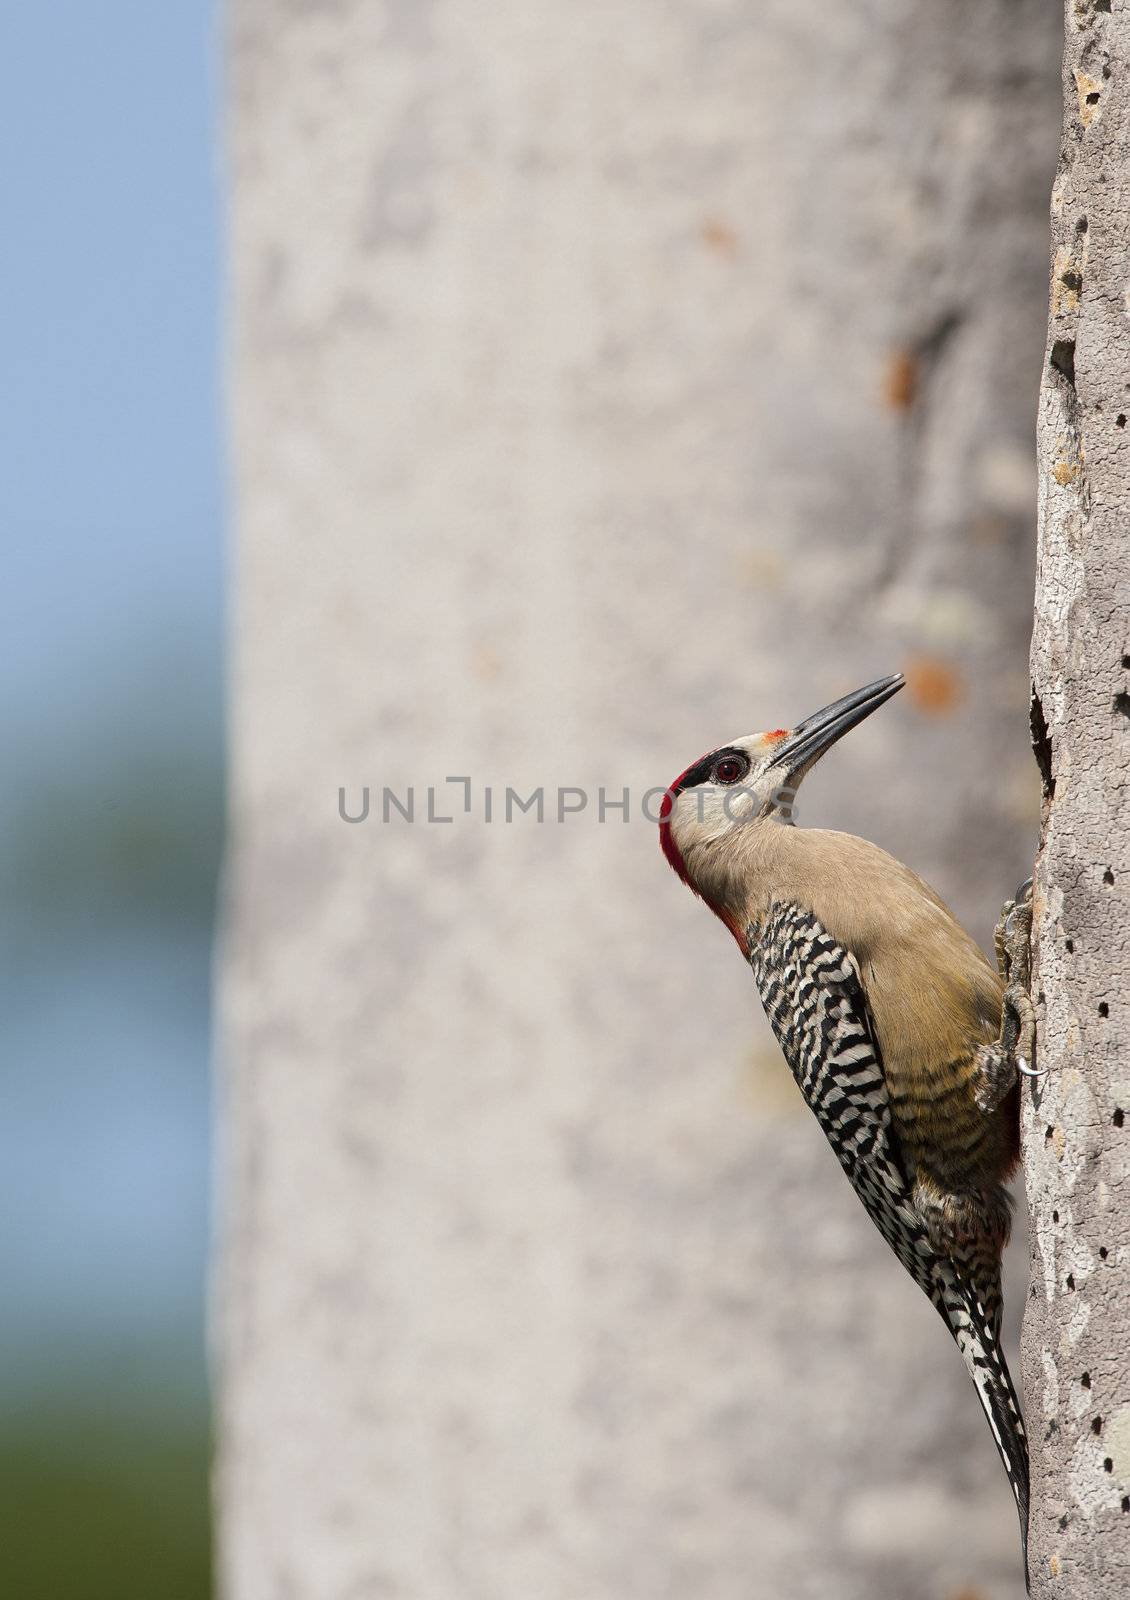 West Indian Woodpecker (Melanerpes superciliaris)  at nesthole in tree trunk.  Cuba